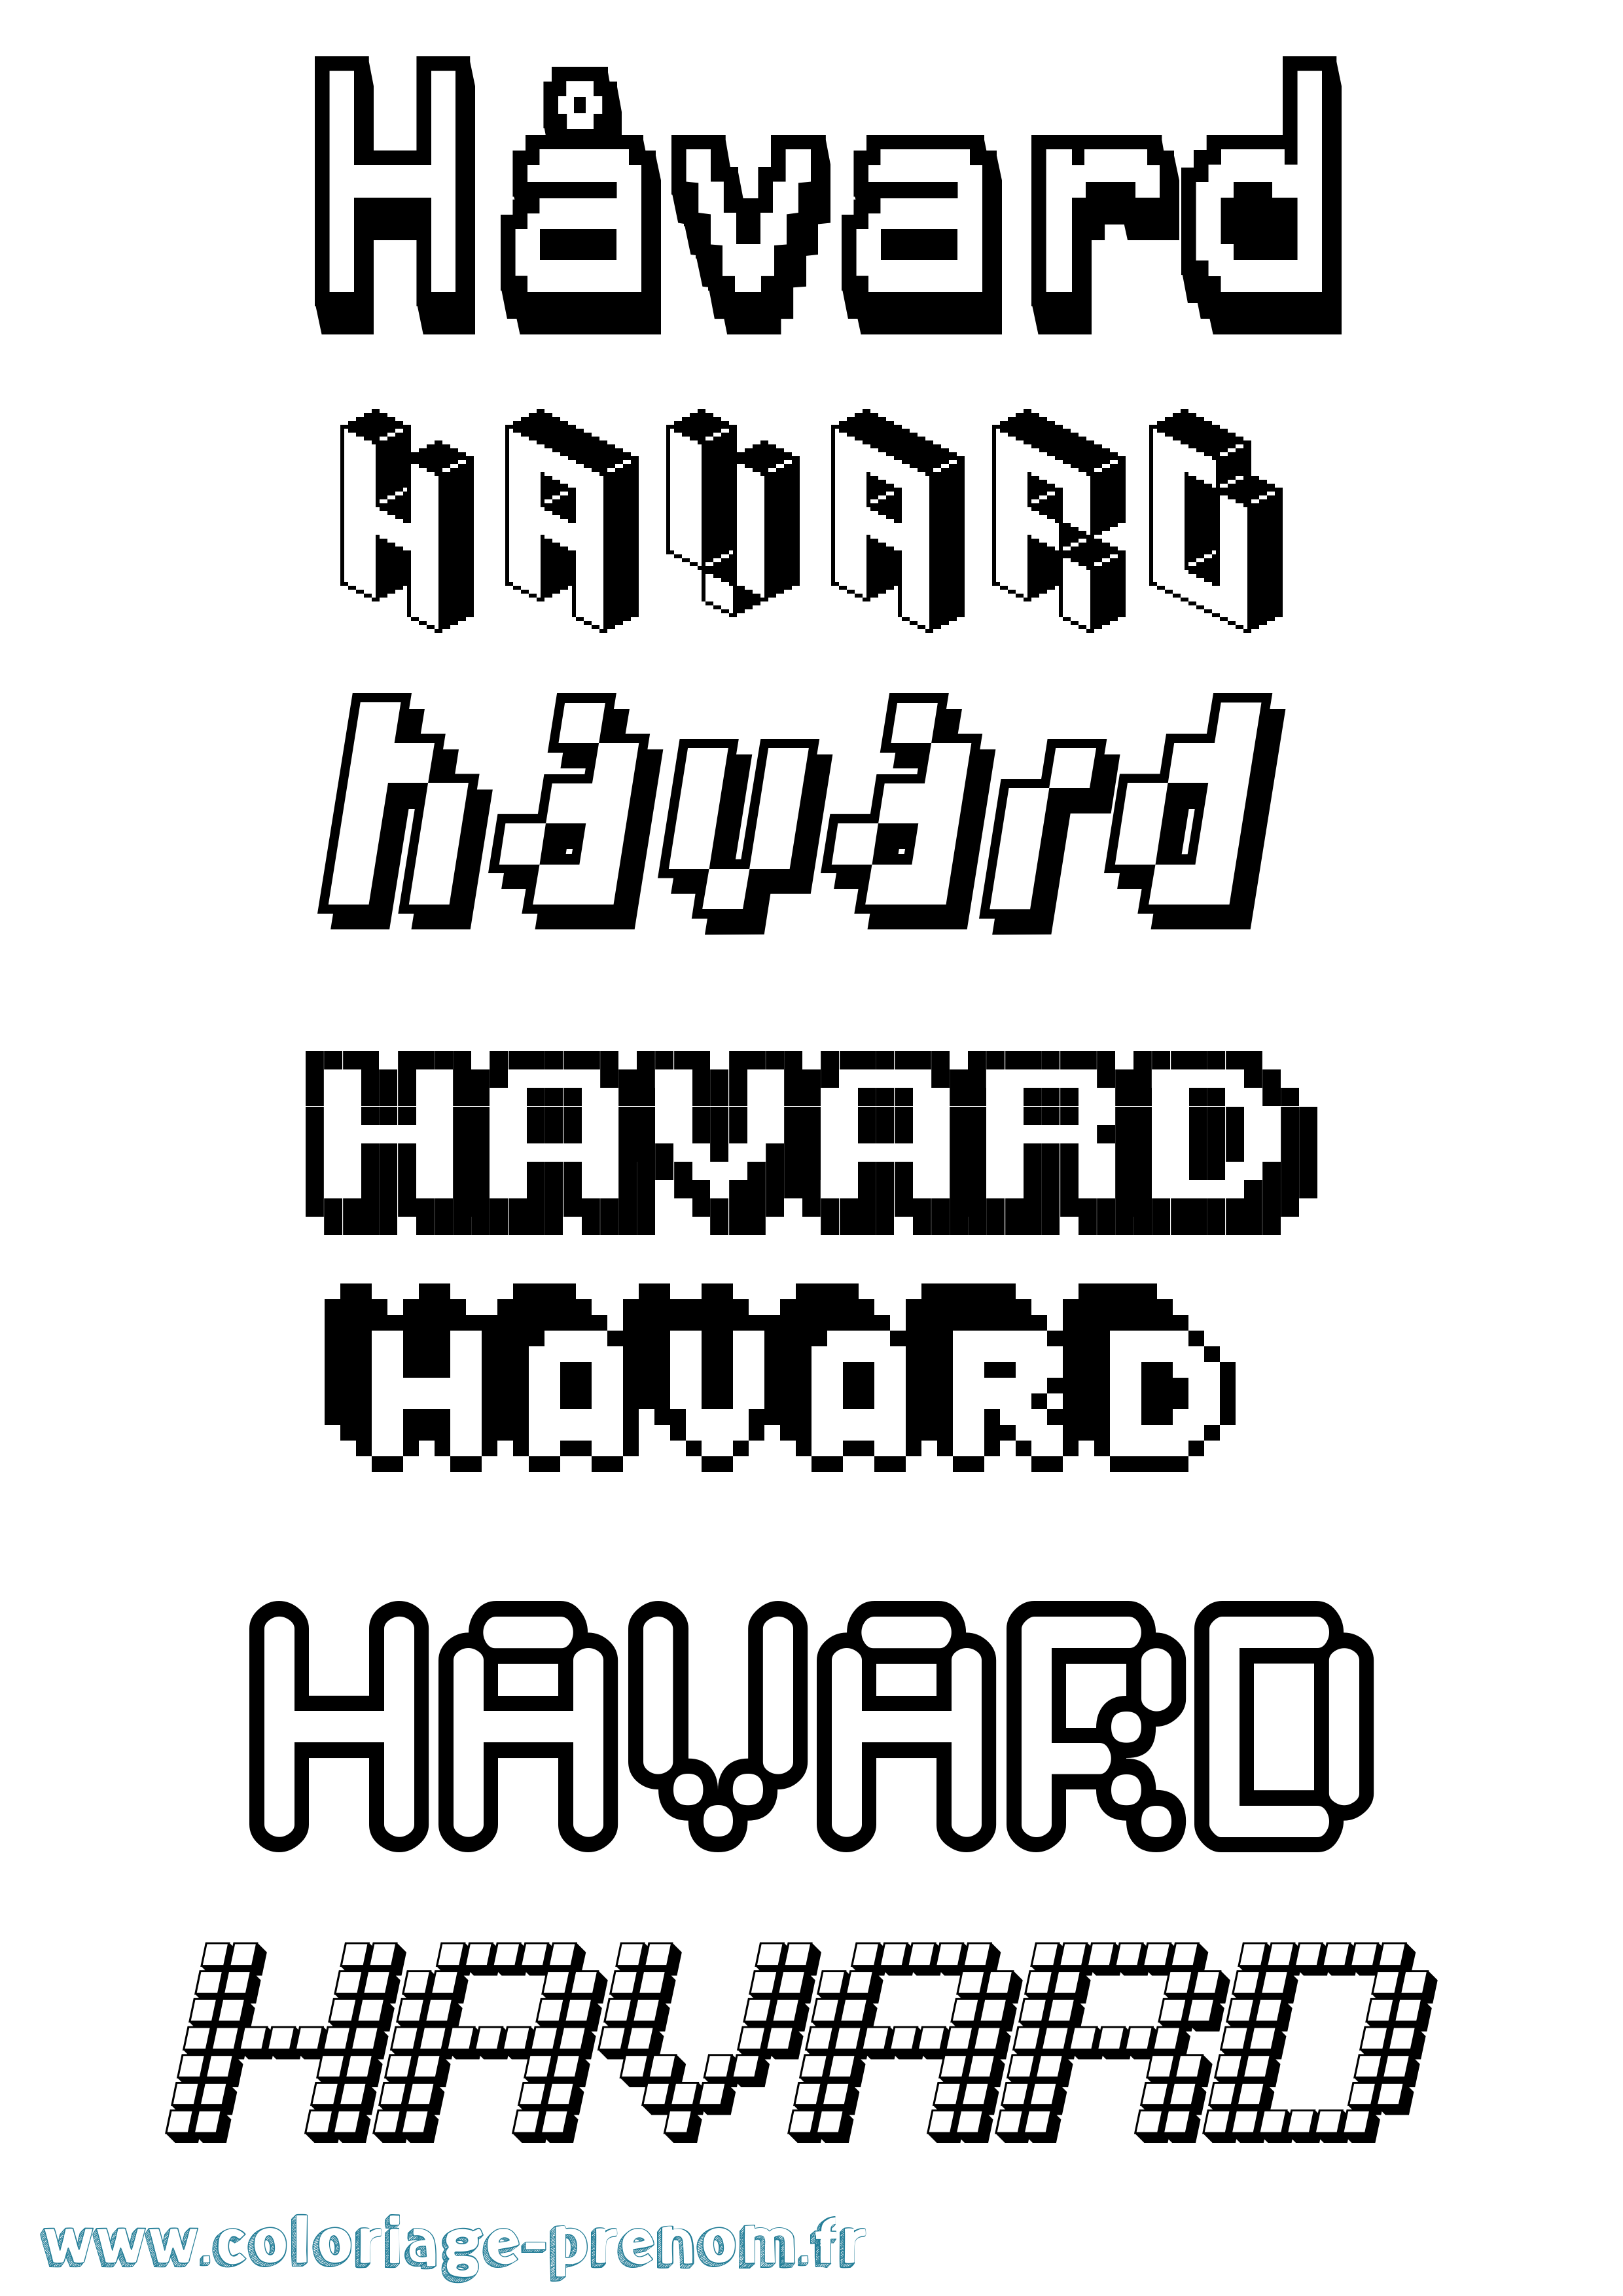 Coloriage prénom Håvard Pixel